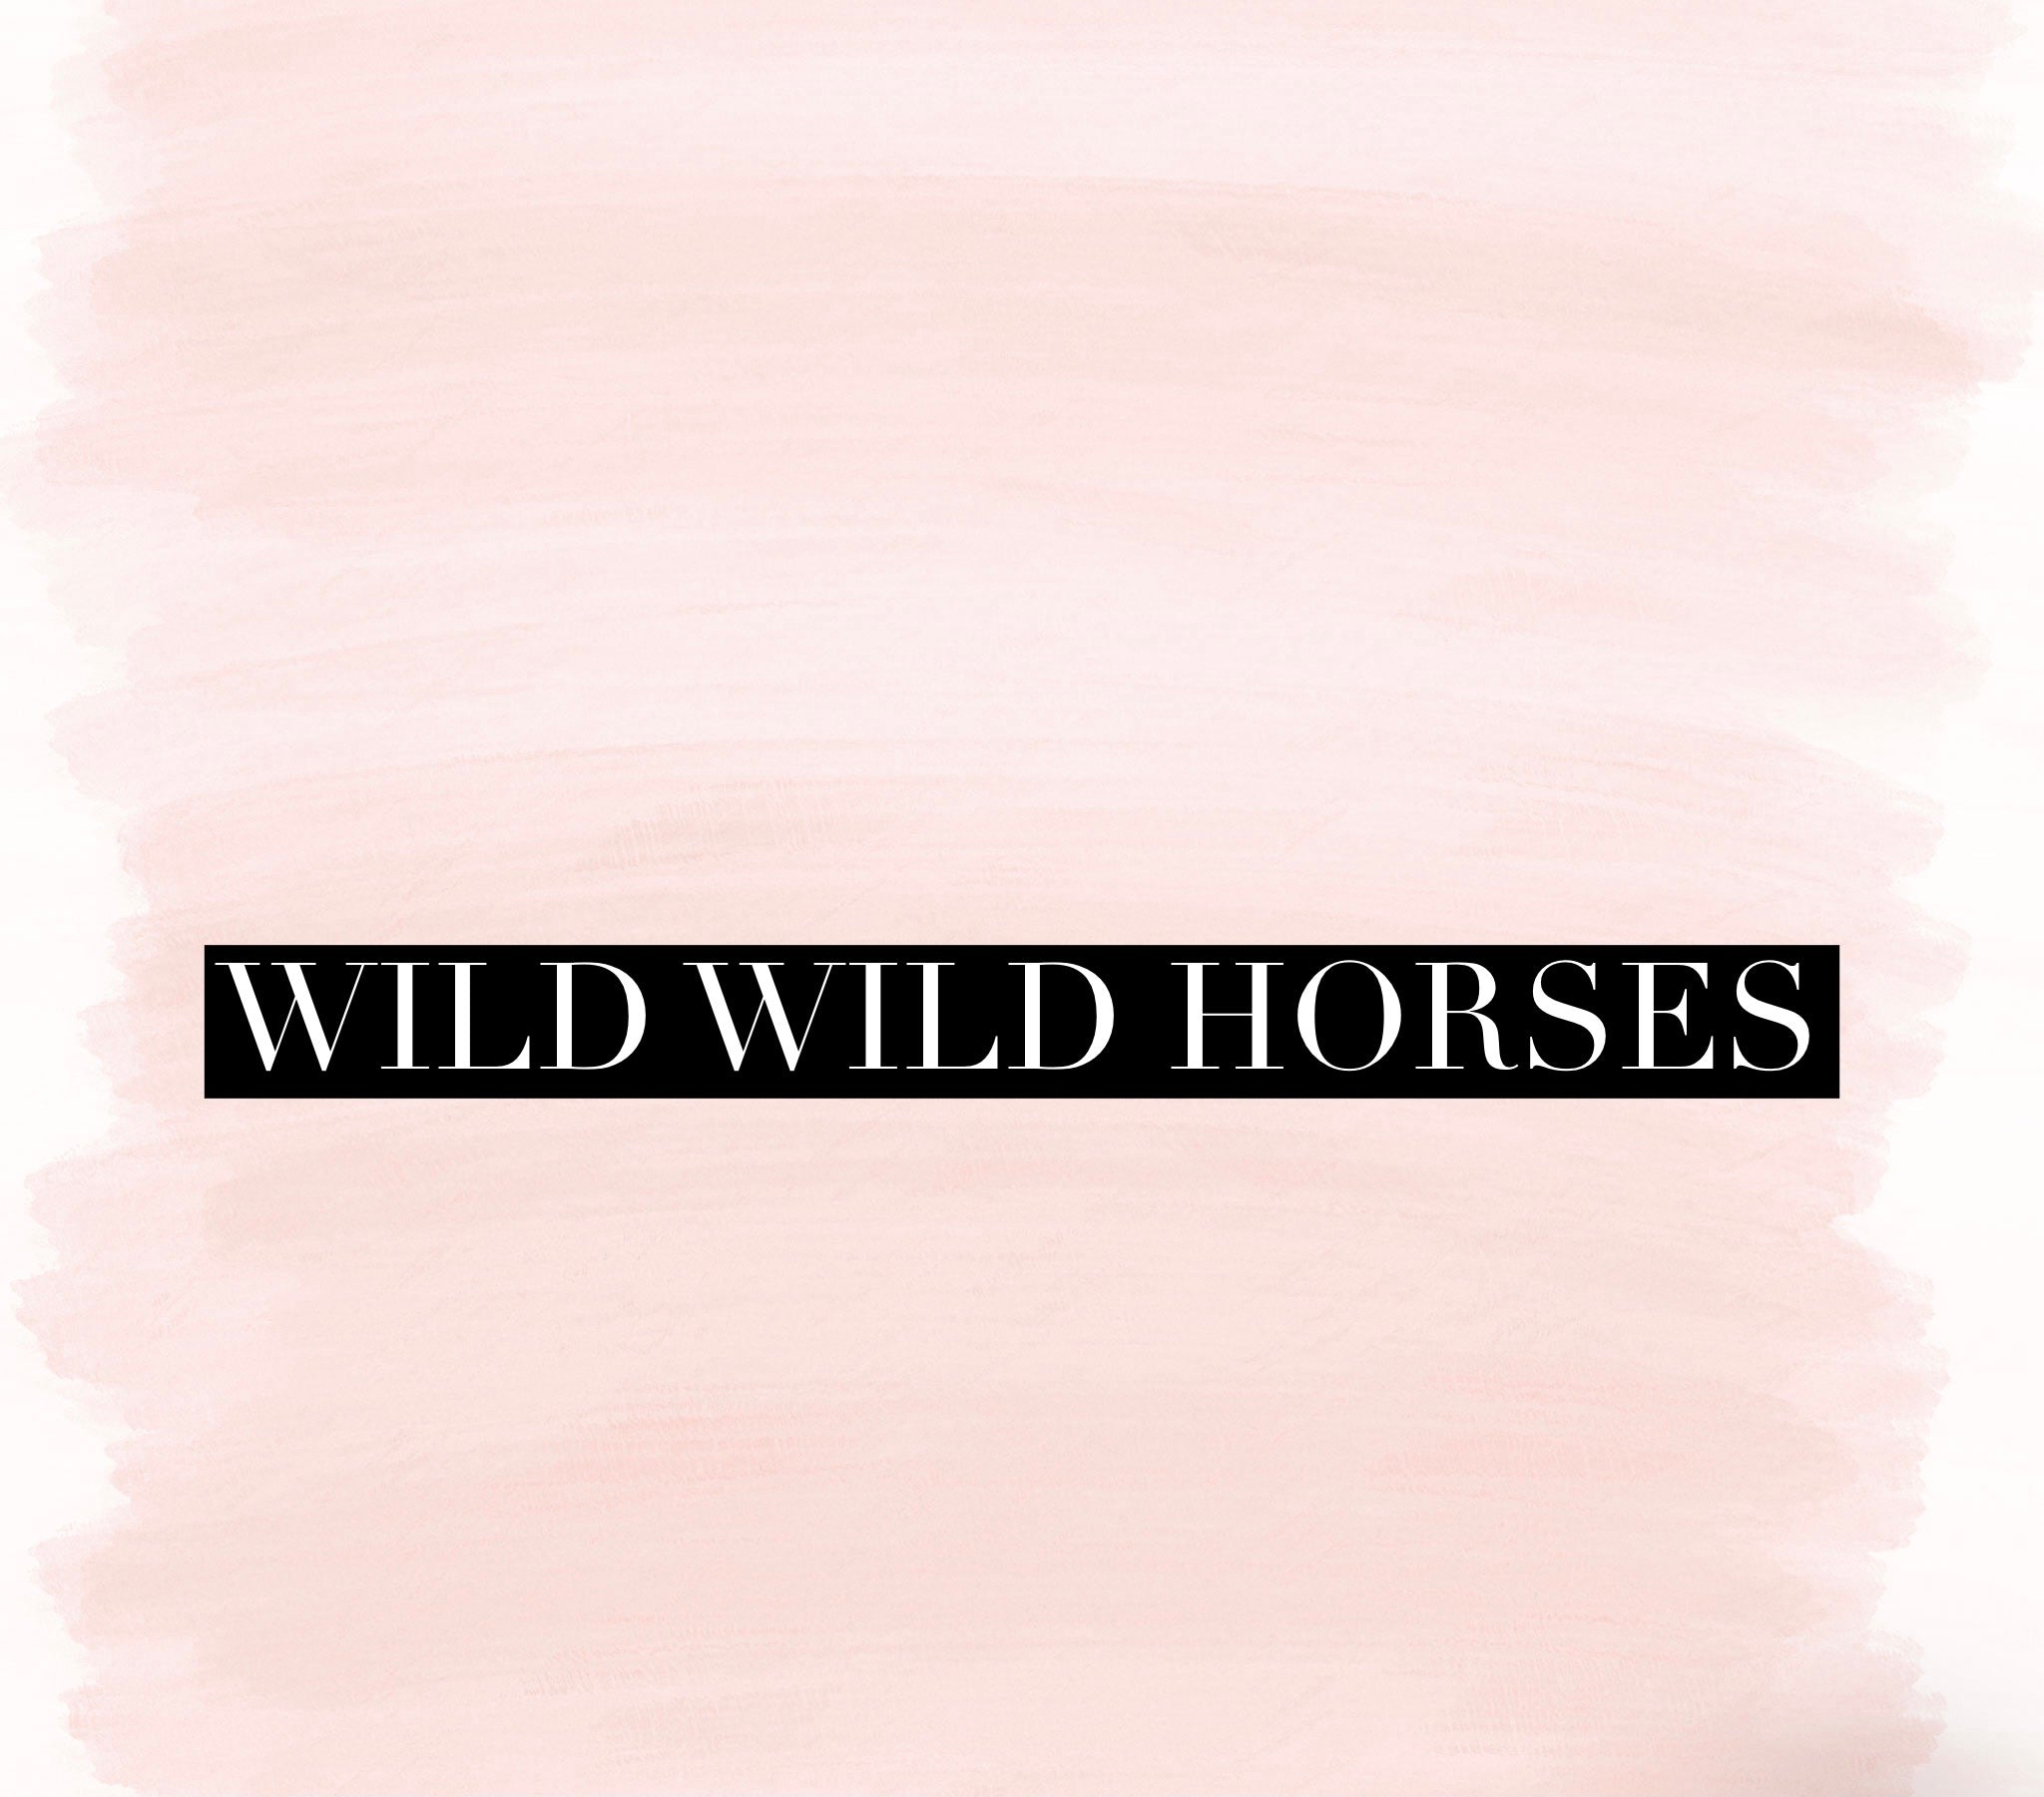 Wild Wild Horses (Special Order)